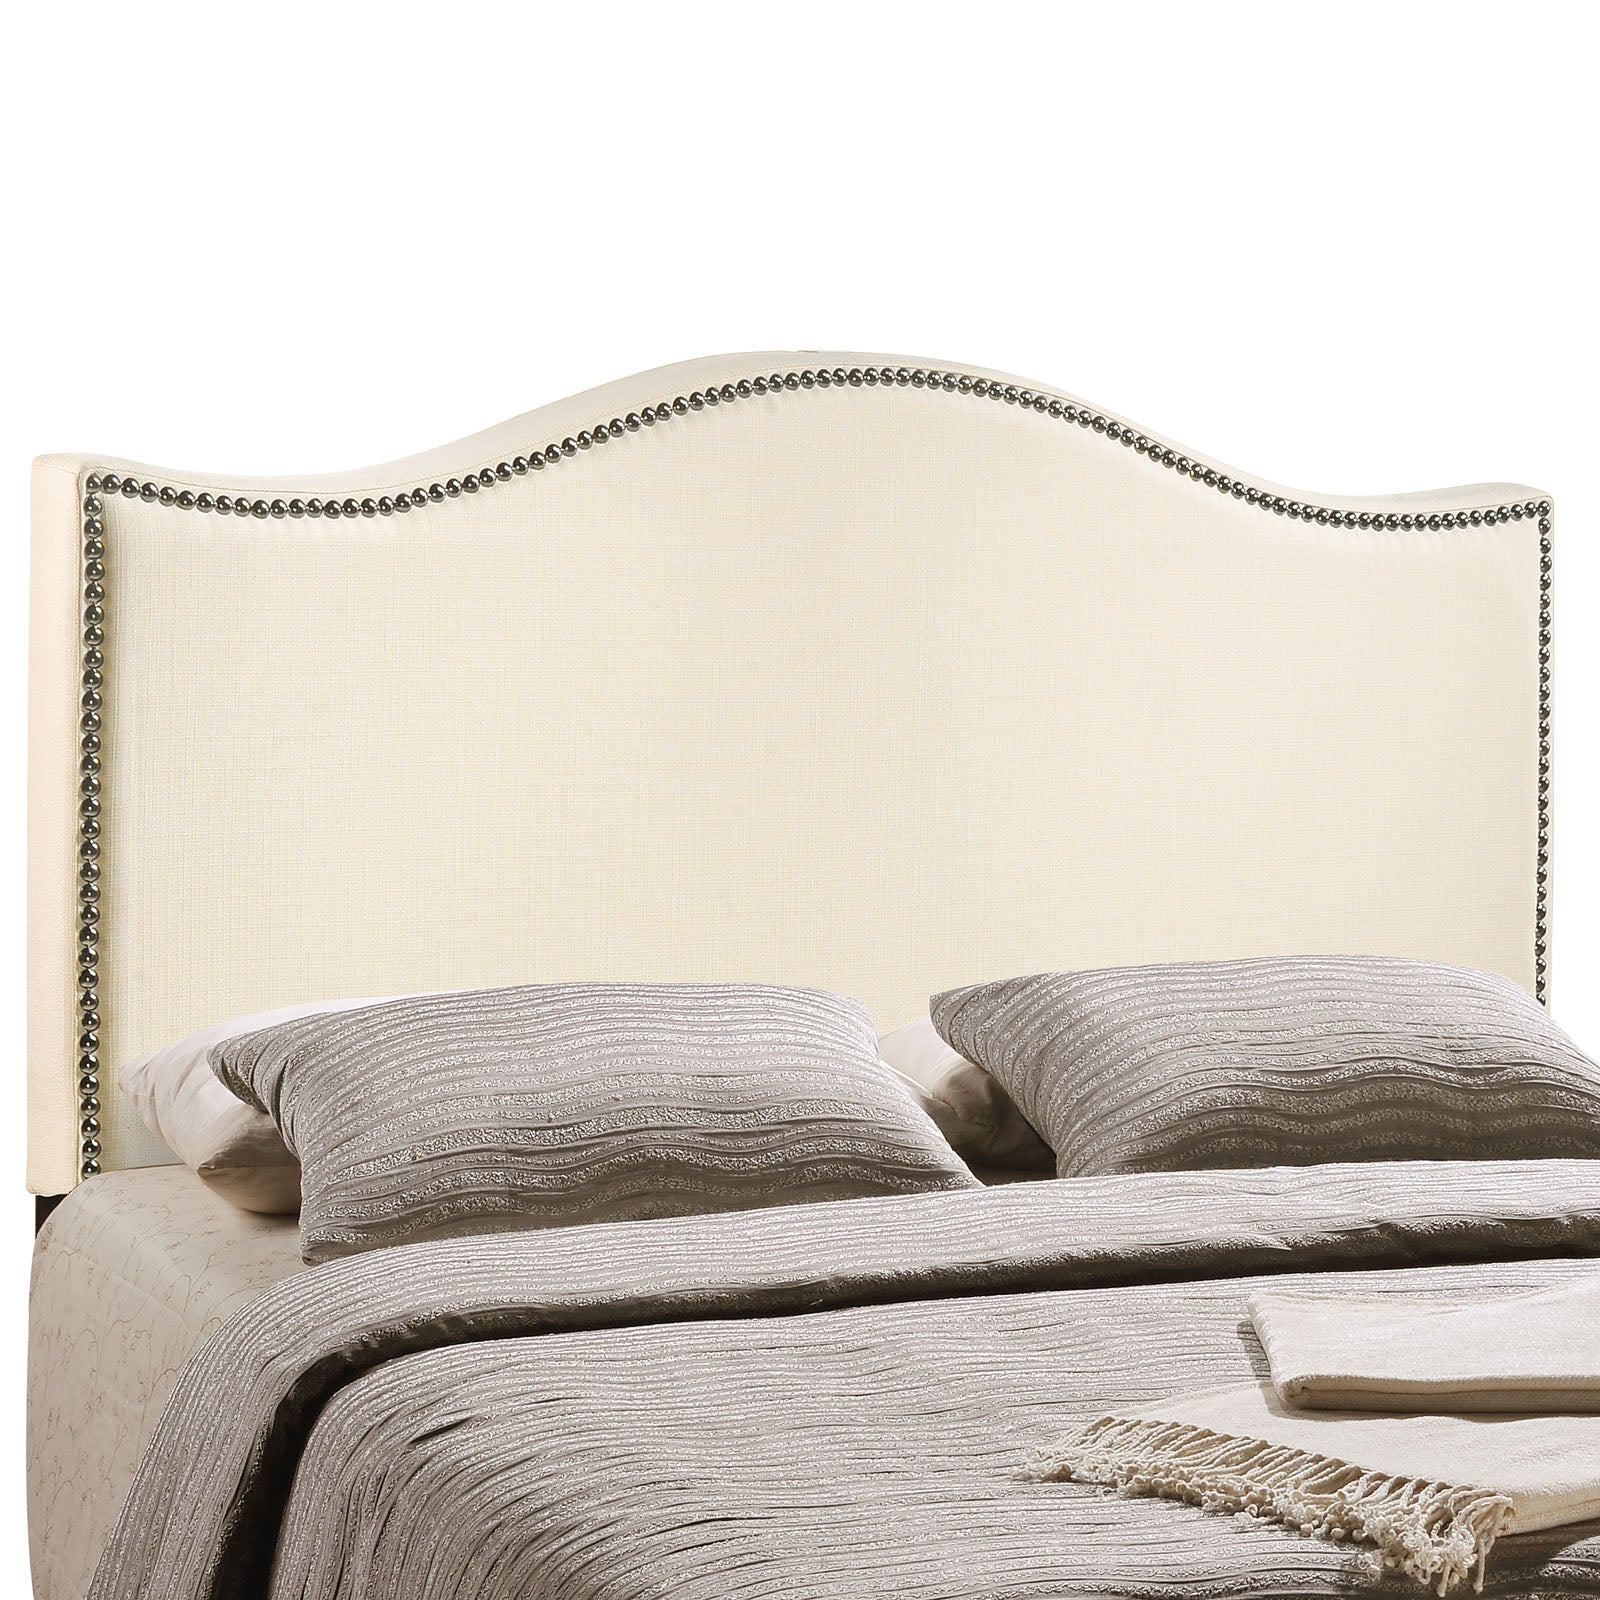 Curl King Nailhead Upholstered Headboard - East Shore Modern Home Furnishings